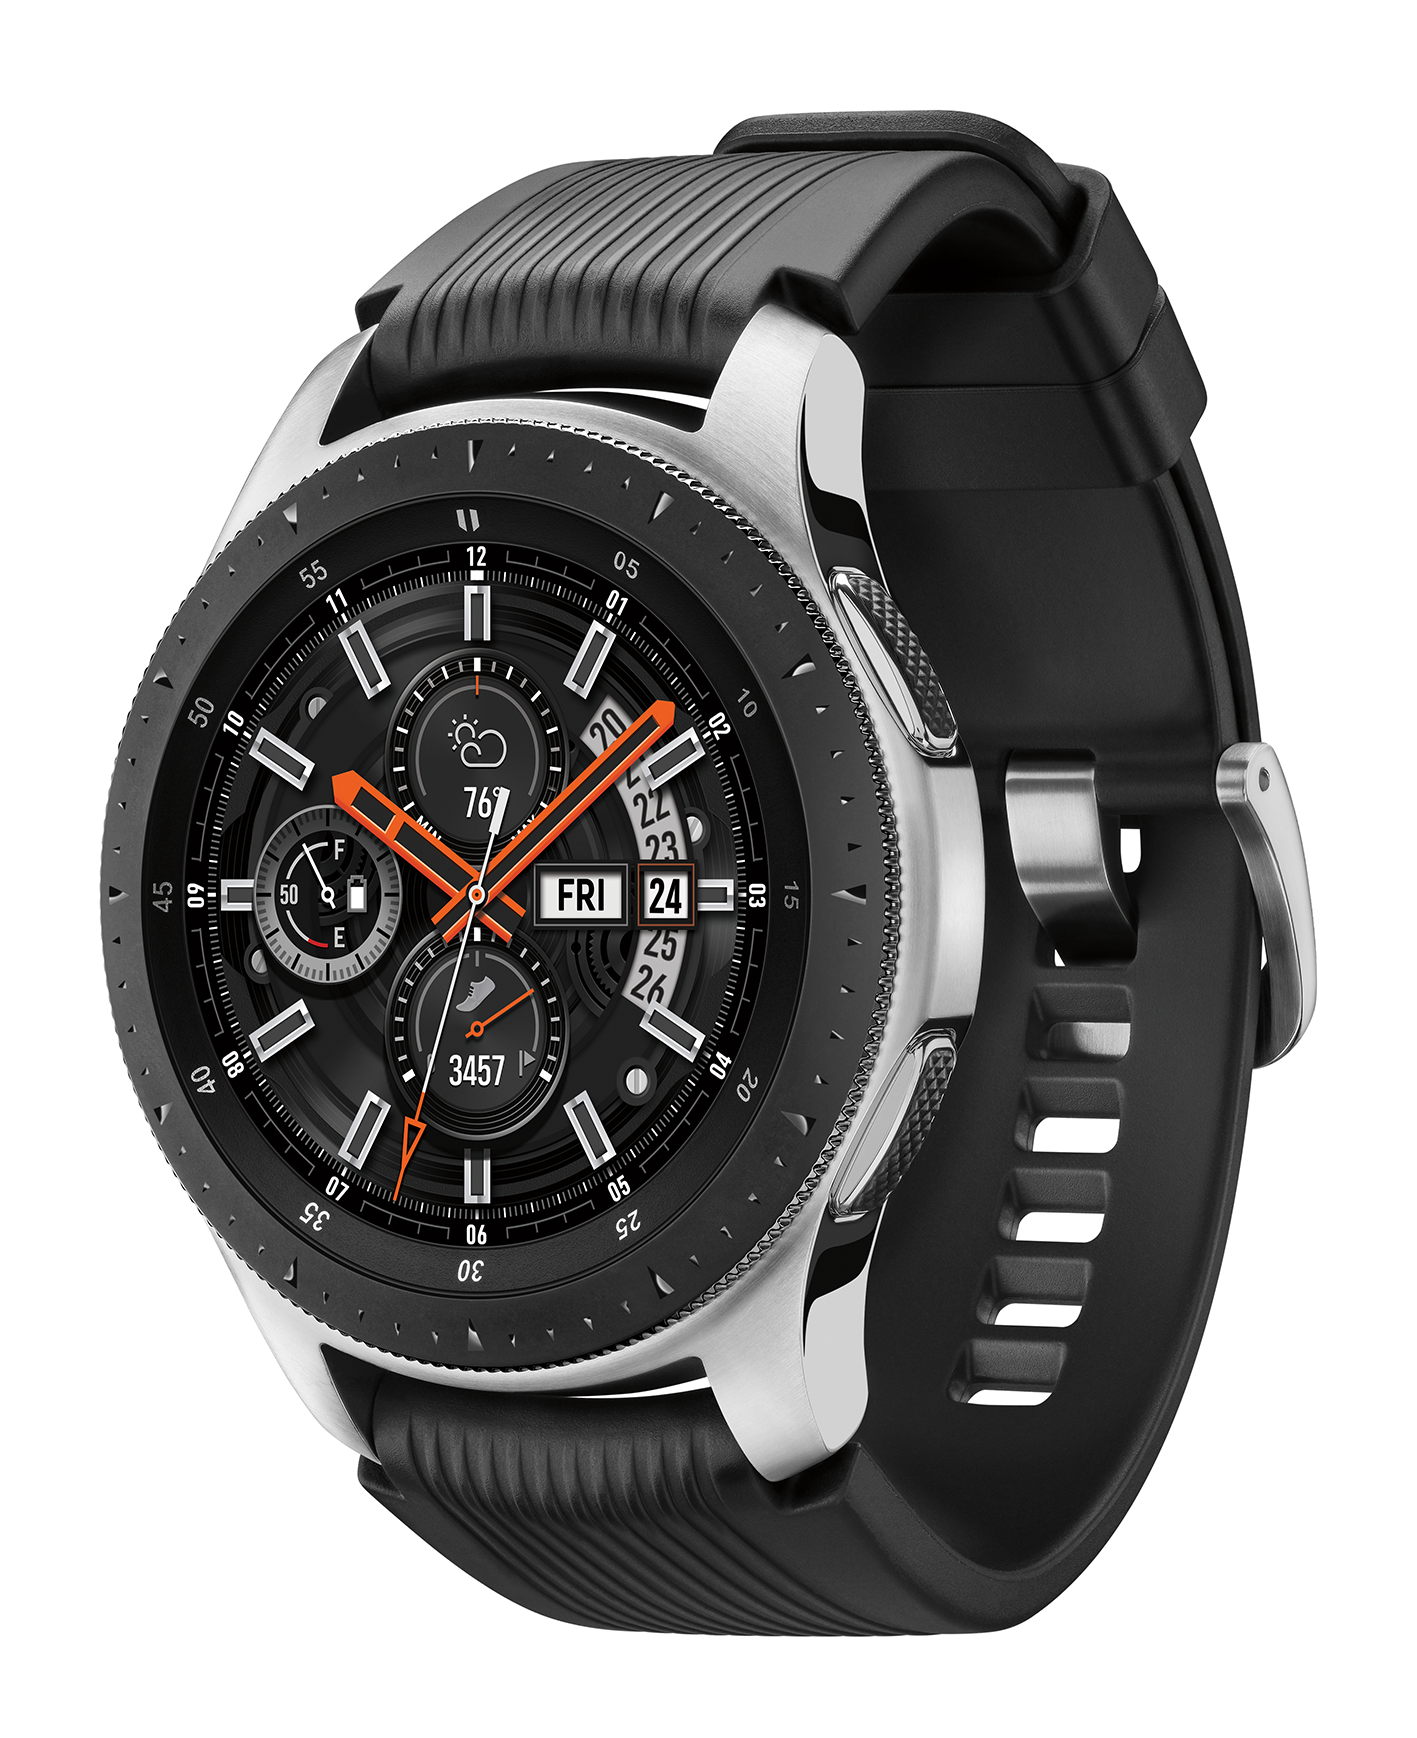 SAMSUNG Galaxy Watch - Bluetooth Smart Watch (46mm) - Silver - SM-R800NZSAXAR - image 1 of 15